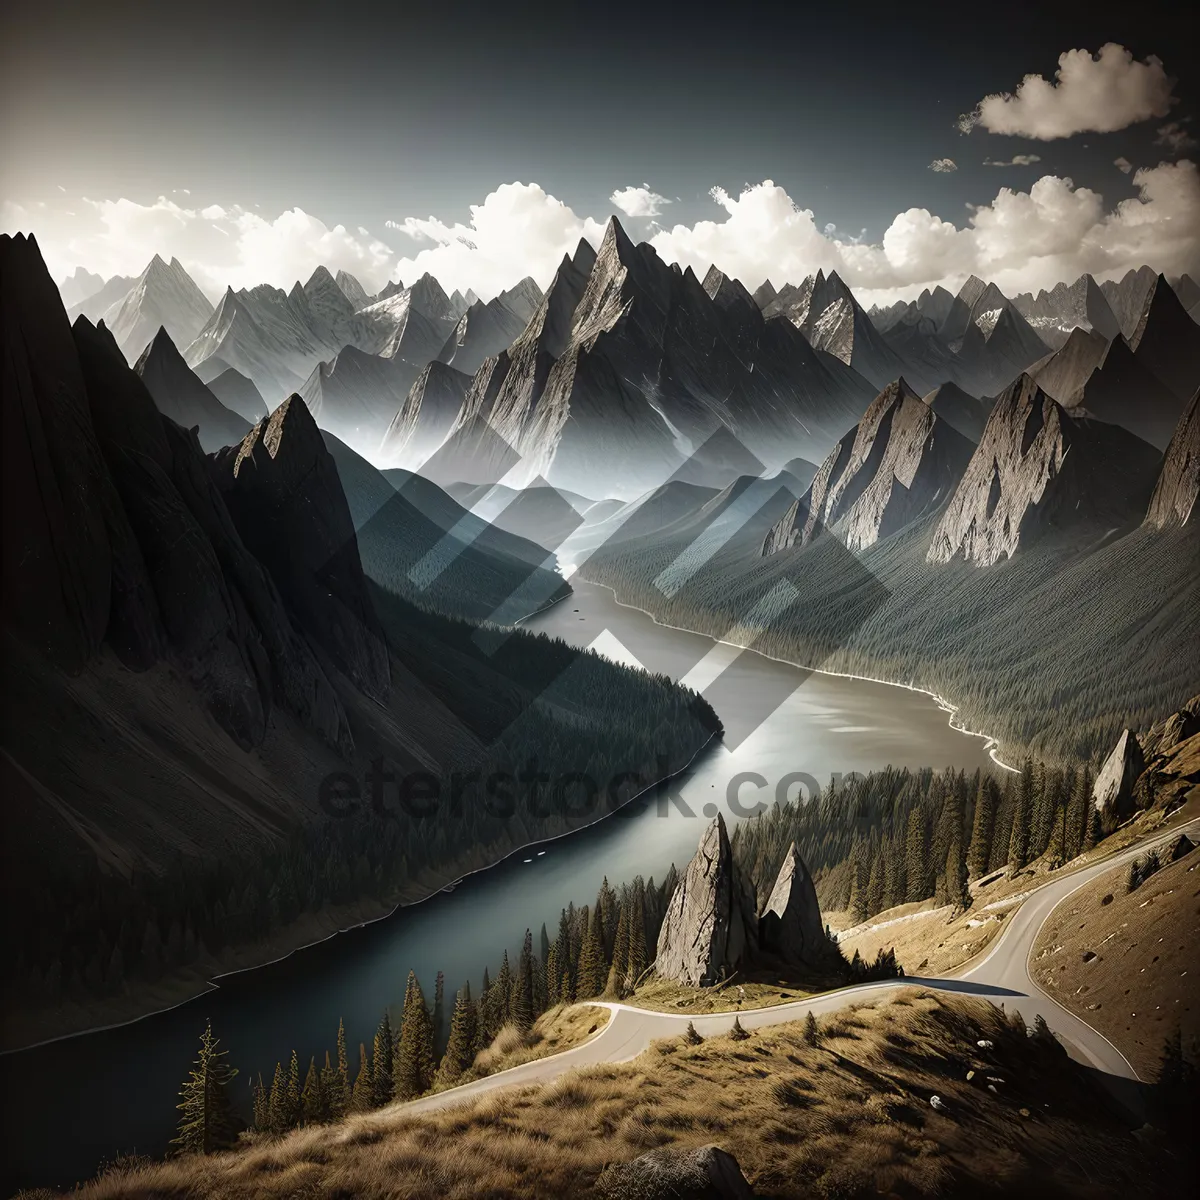 Picture of Majestic Glacier Peaks Reflecting in Serene Alpine Lake